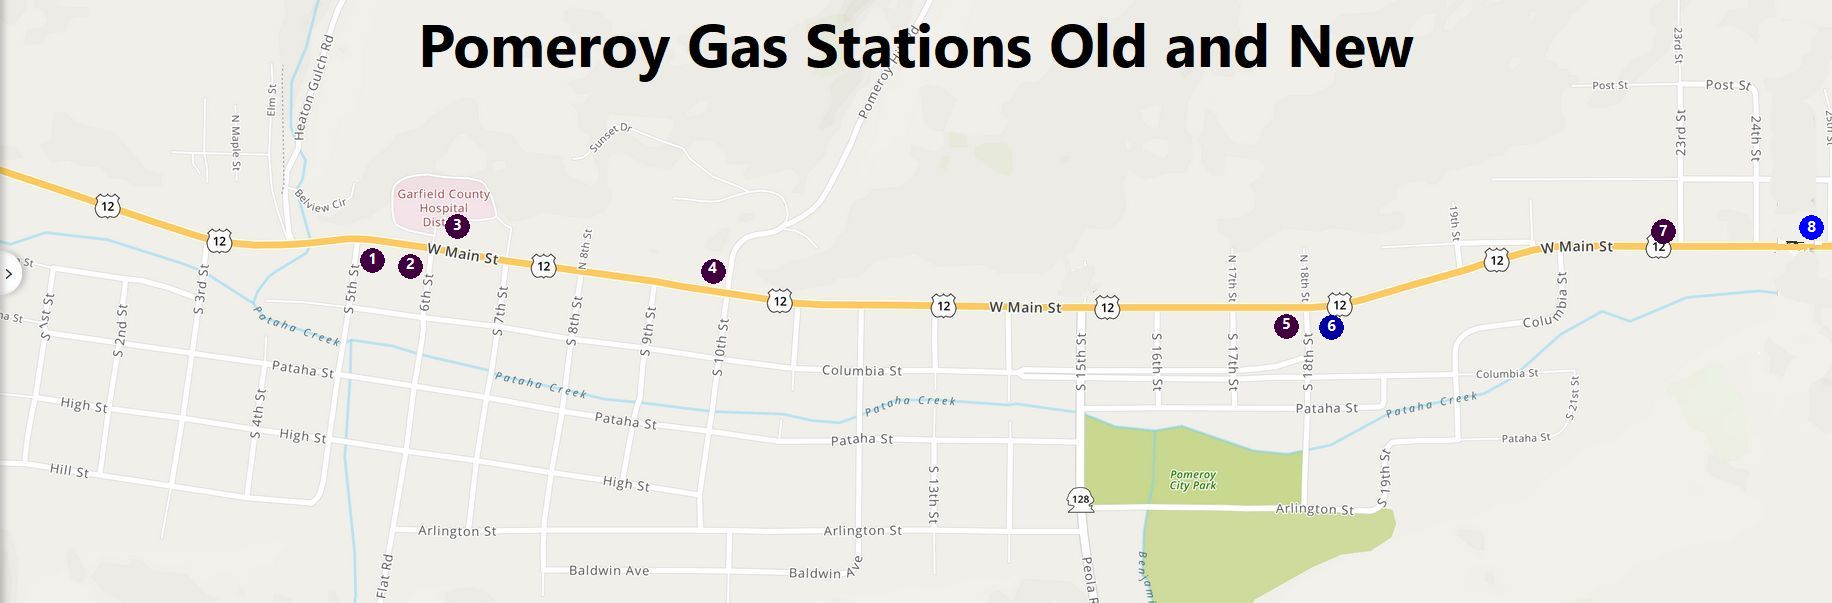 Pomeroy Gas Stations 1970